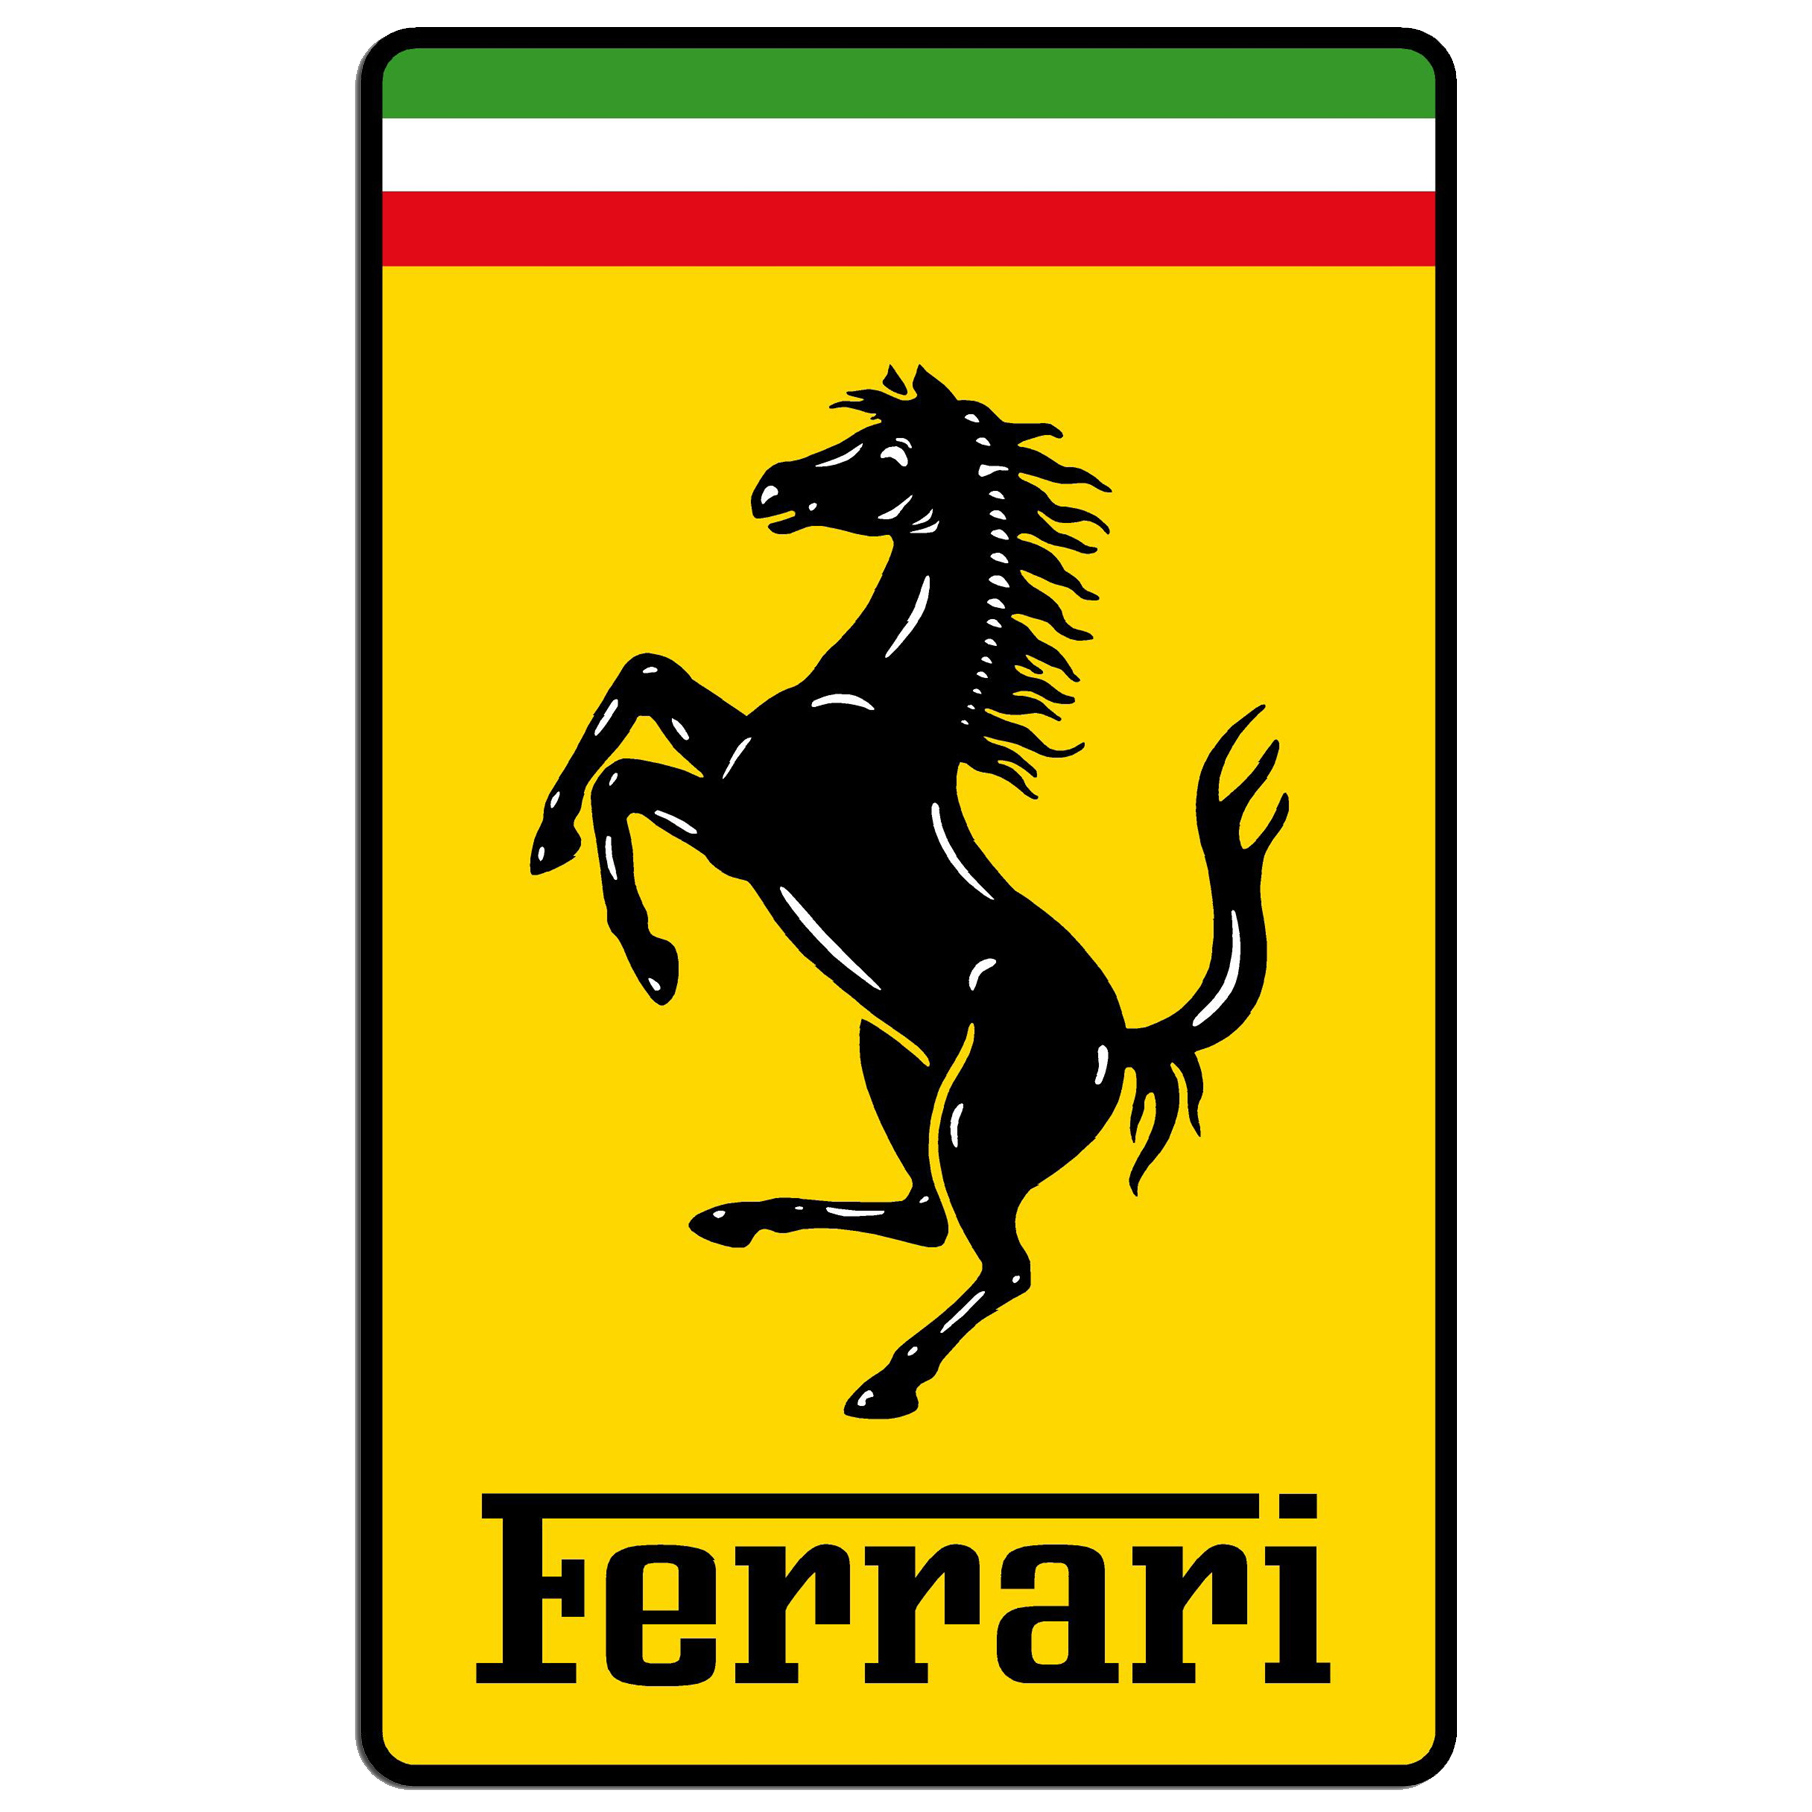 Ferrari 456 (1992 - 2003) for sale